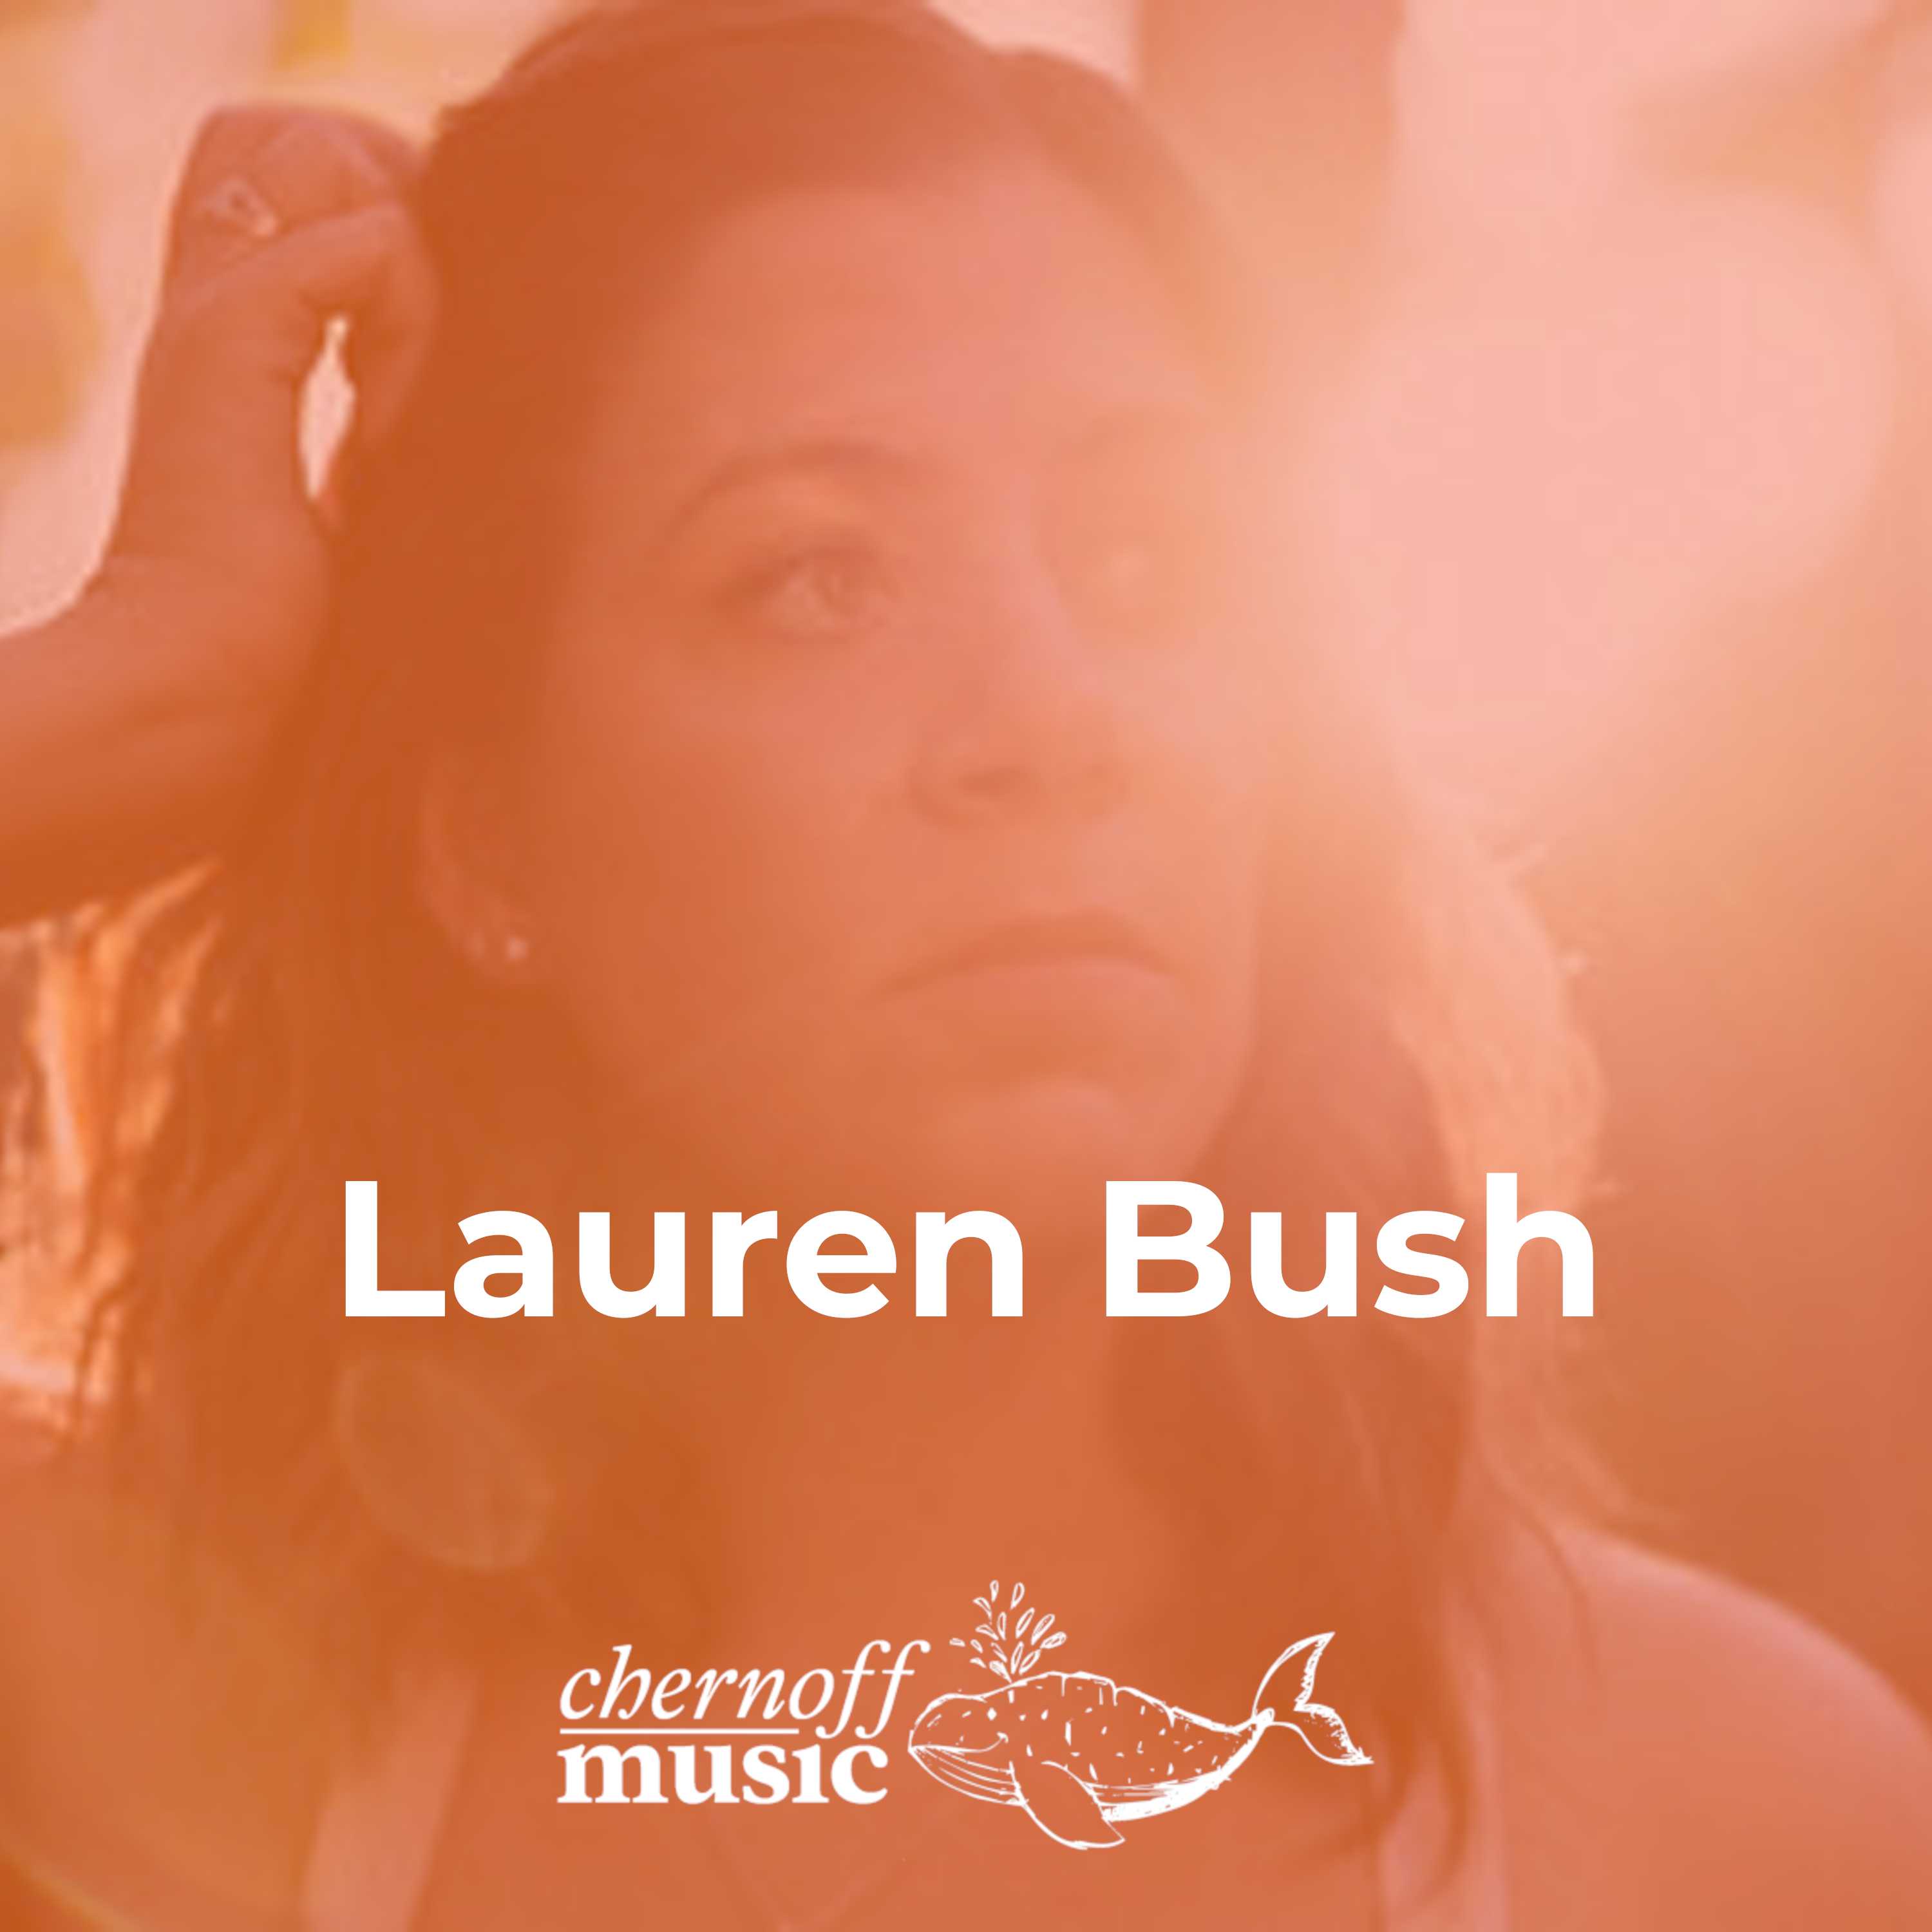 Lauren Bush - Dream Away, From BC to the UK, Mini-Tour